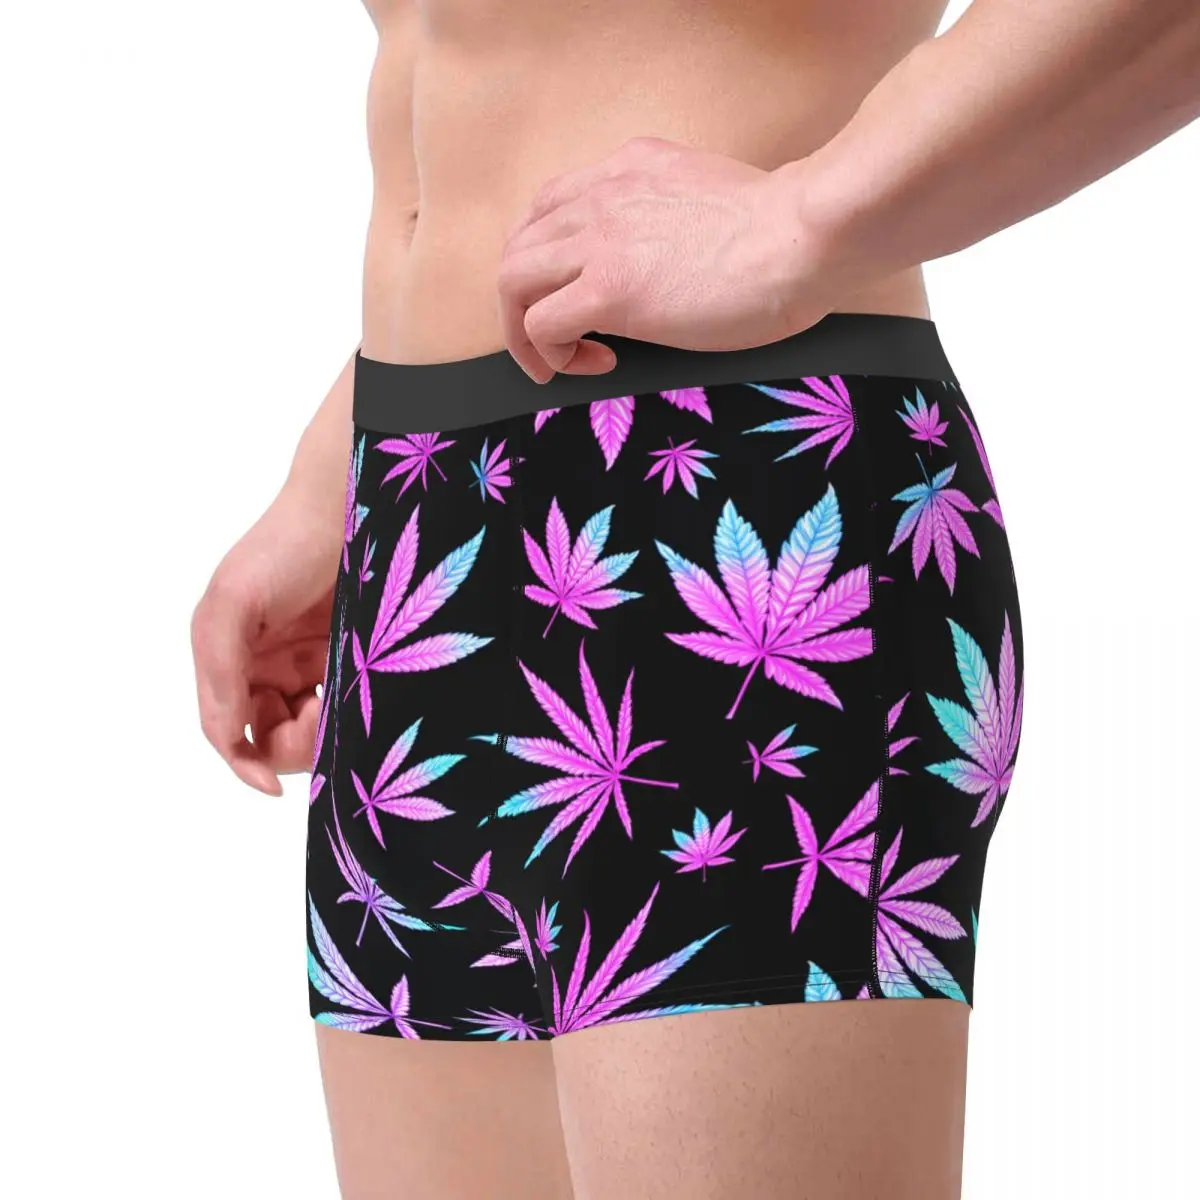 https://ae01.alicdn.com/kf/S20d944d4024b4d5a8be63d1b731d6ee8H/Men-Cannabis-Leaf-Plant-Hemp-Underwear-Fluorescent-Colors-Printed-Boxer-Shorts-Panties-Male-Breathable-Underpants.jpg